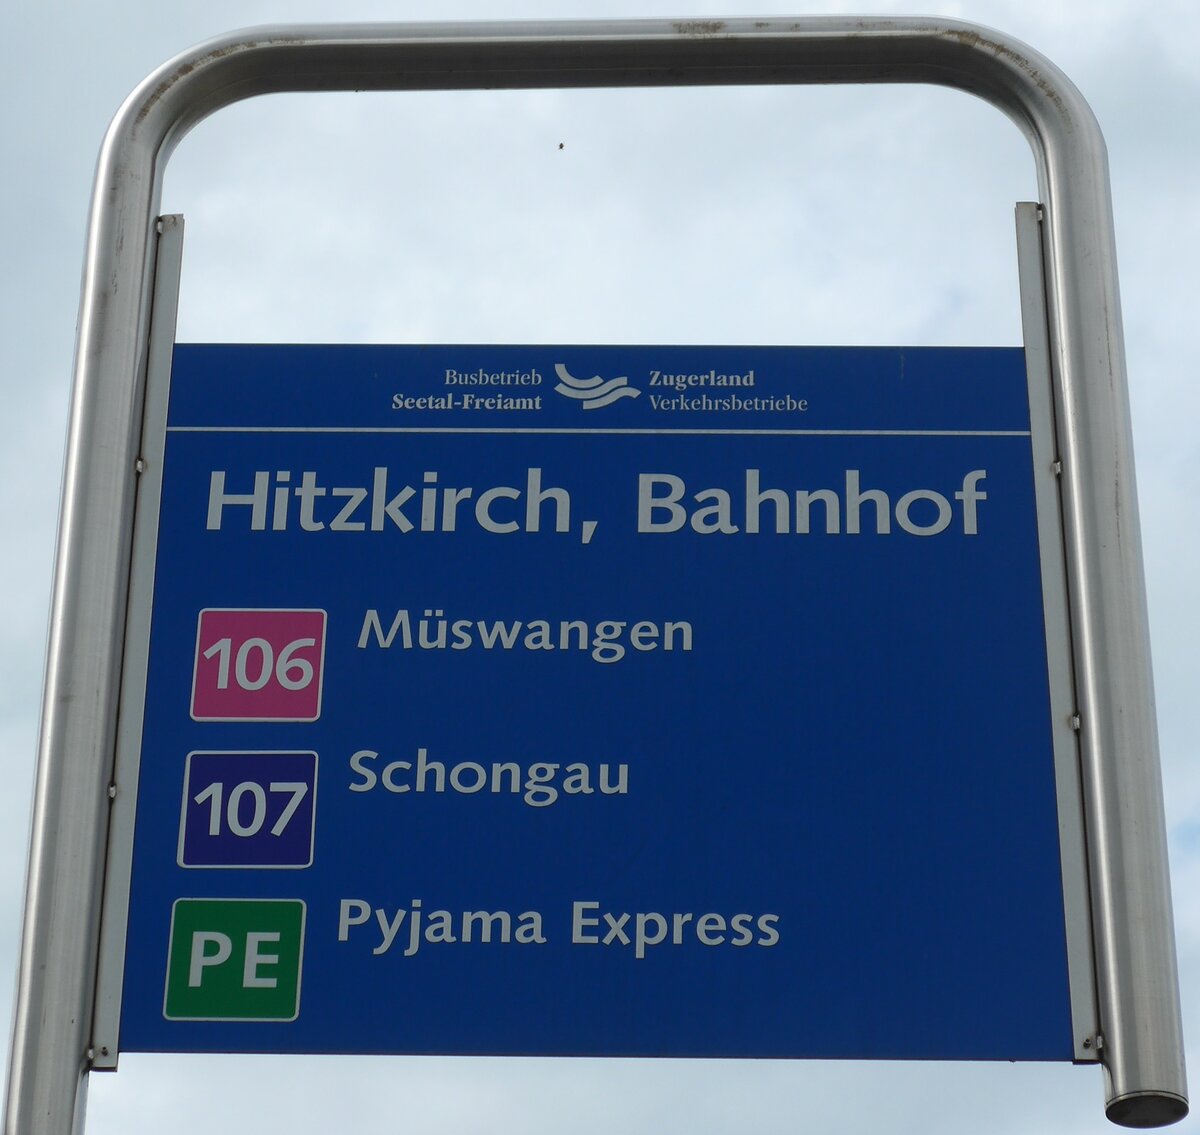 (154'135) - Busbetrieb Seetal-Freiamt/Zugerland Verkehrsbetriebe-Haltestellenschild - Hitzkirch, Bahnhof - am 19. August 2014